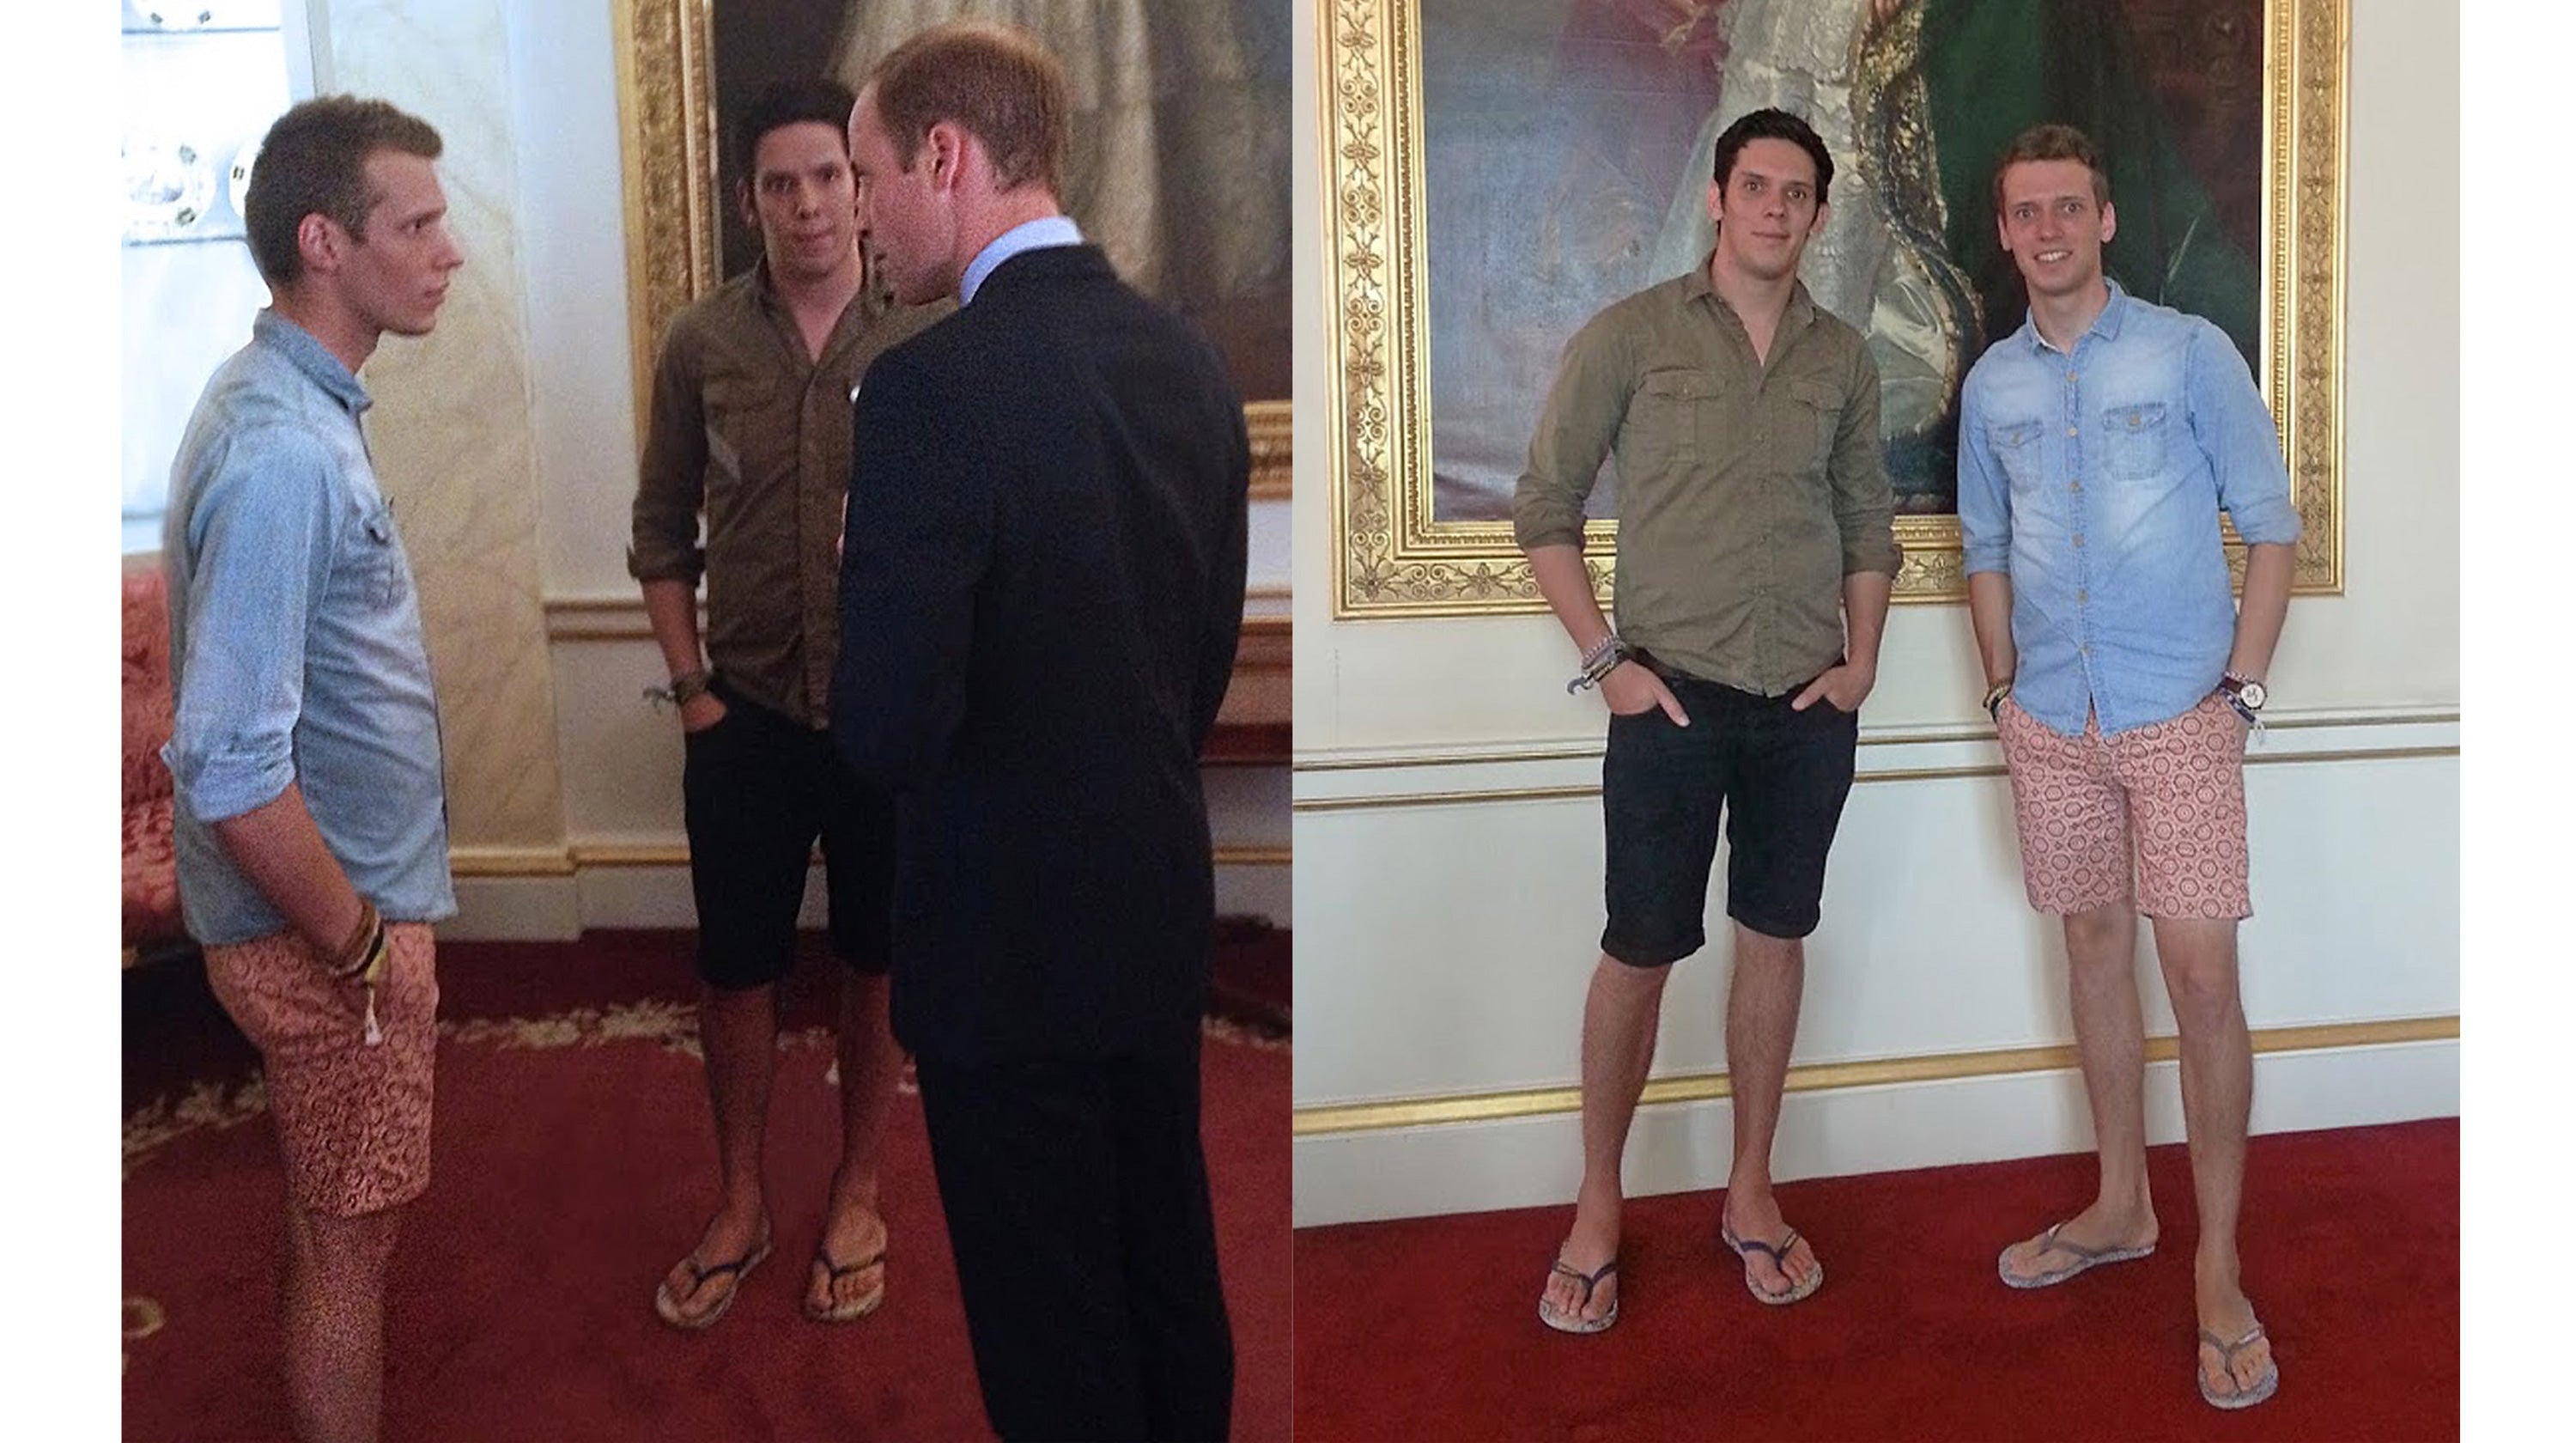 Gandys Brothers meeting Prince William